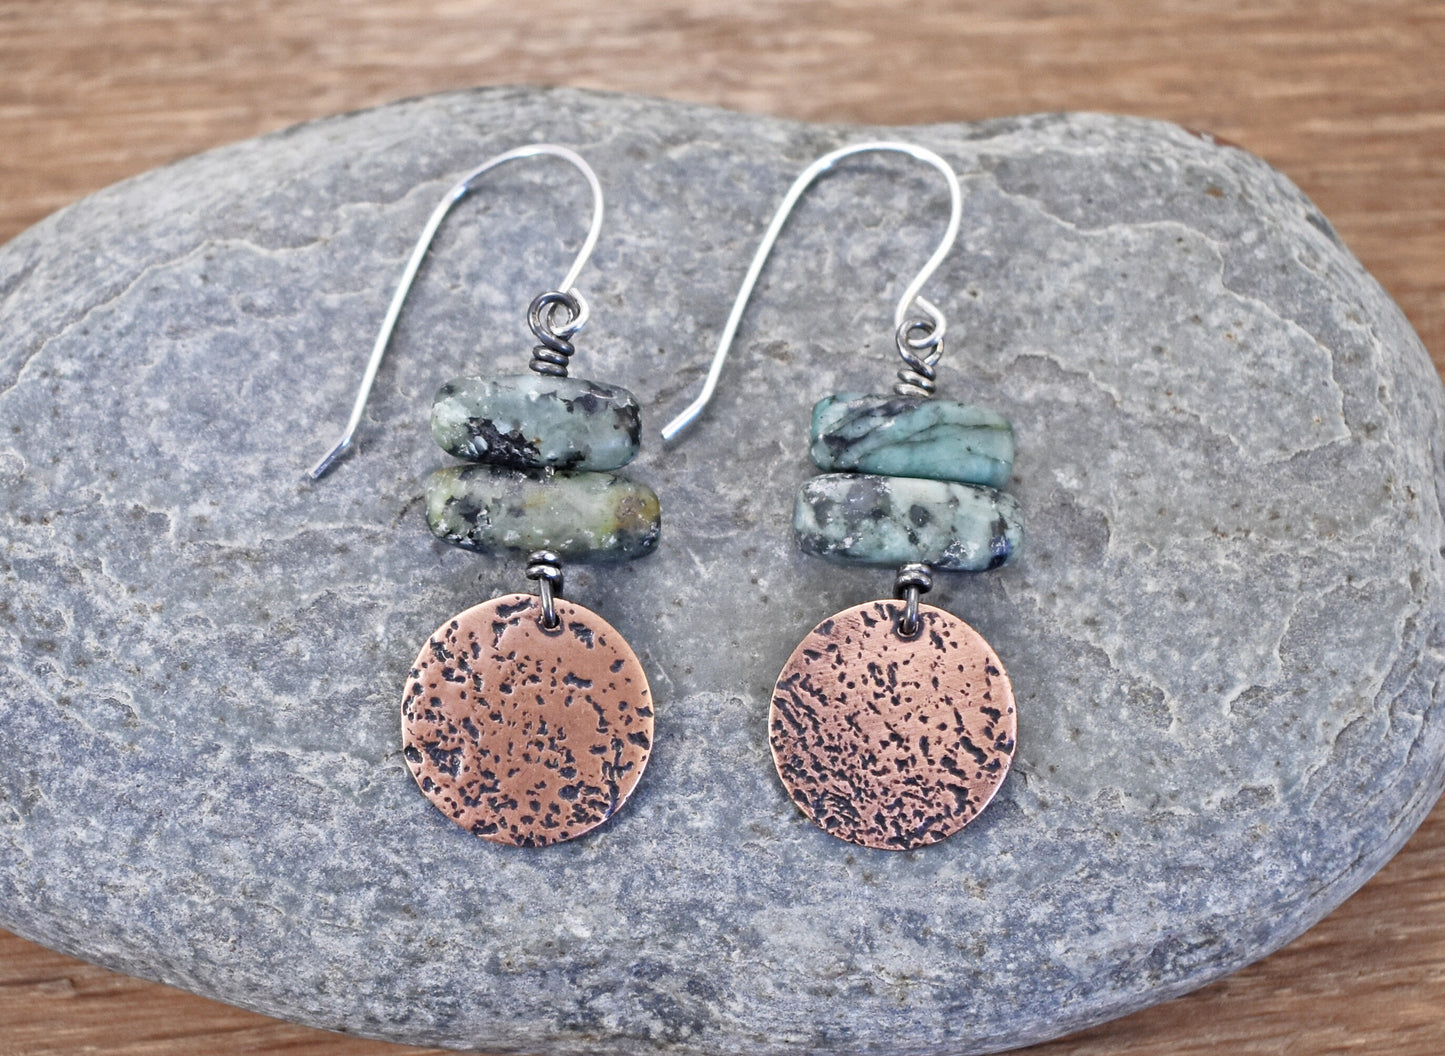 African Turquoise Jasper Earrings, Earthy Copper Gemstone Dangles, Rustic Green Stone Jewelry Handmade